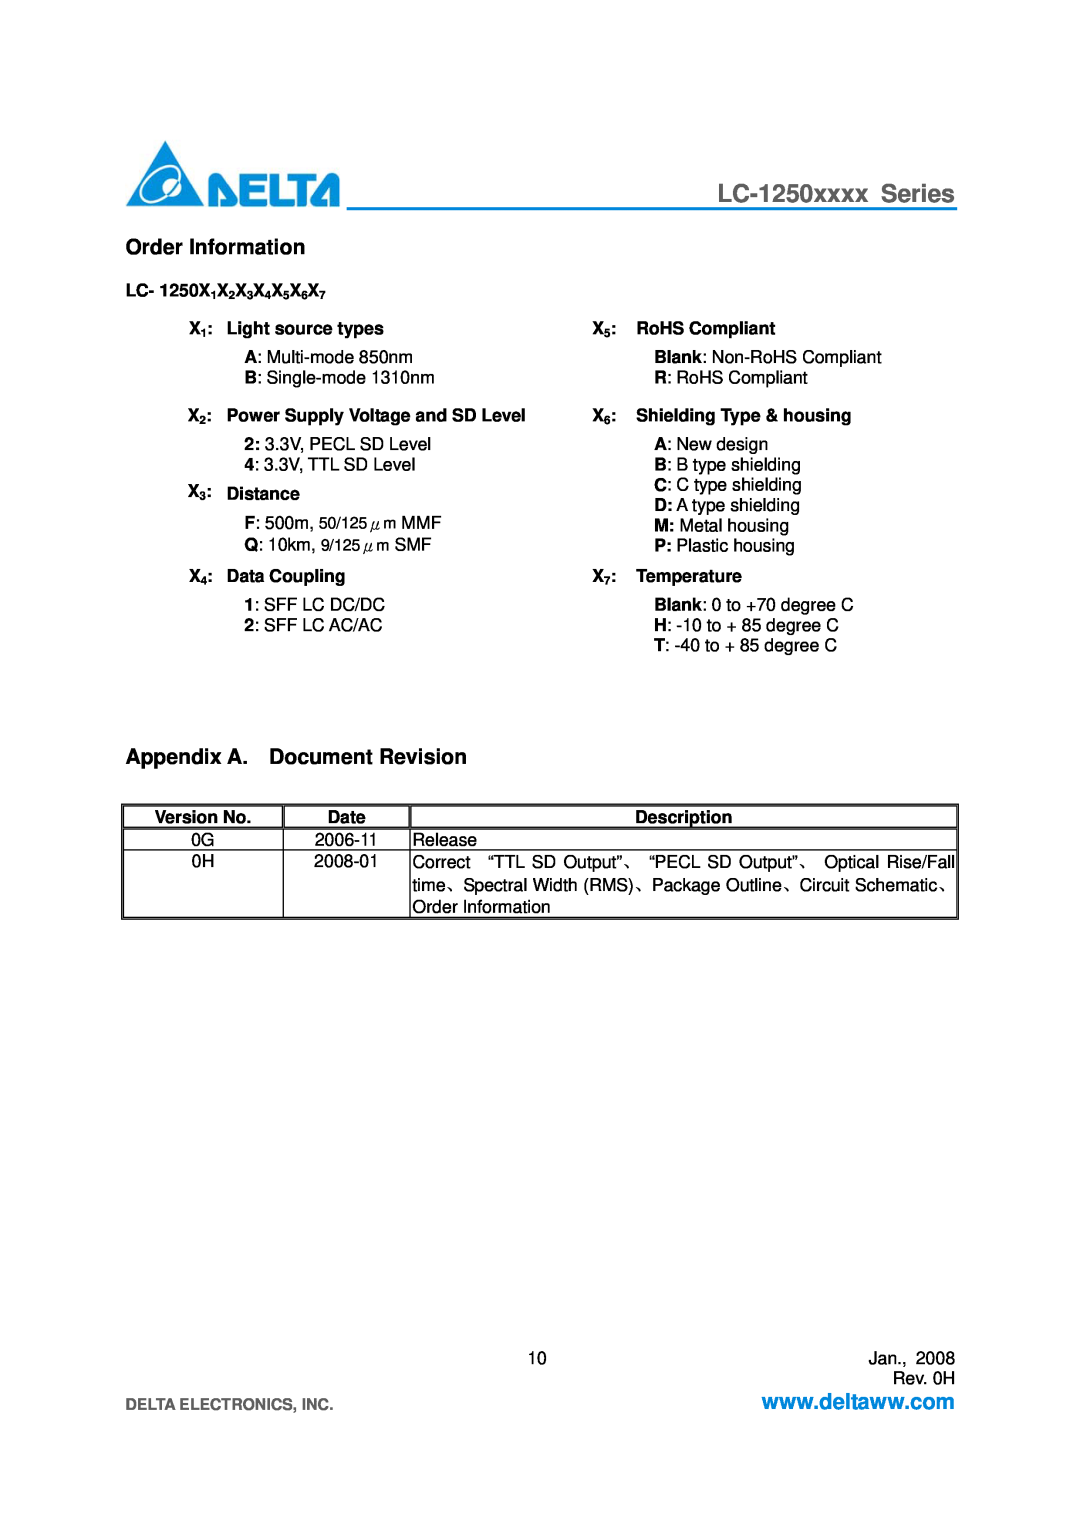 Delta Electronics LC-1250xxxx Series specifications Order Information, Appendix A, Document Revision, Version No 